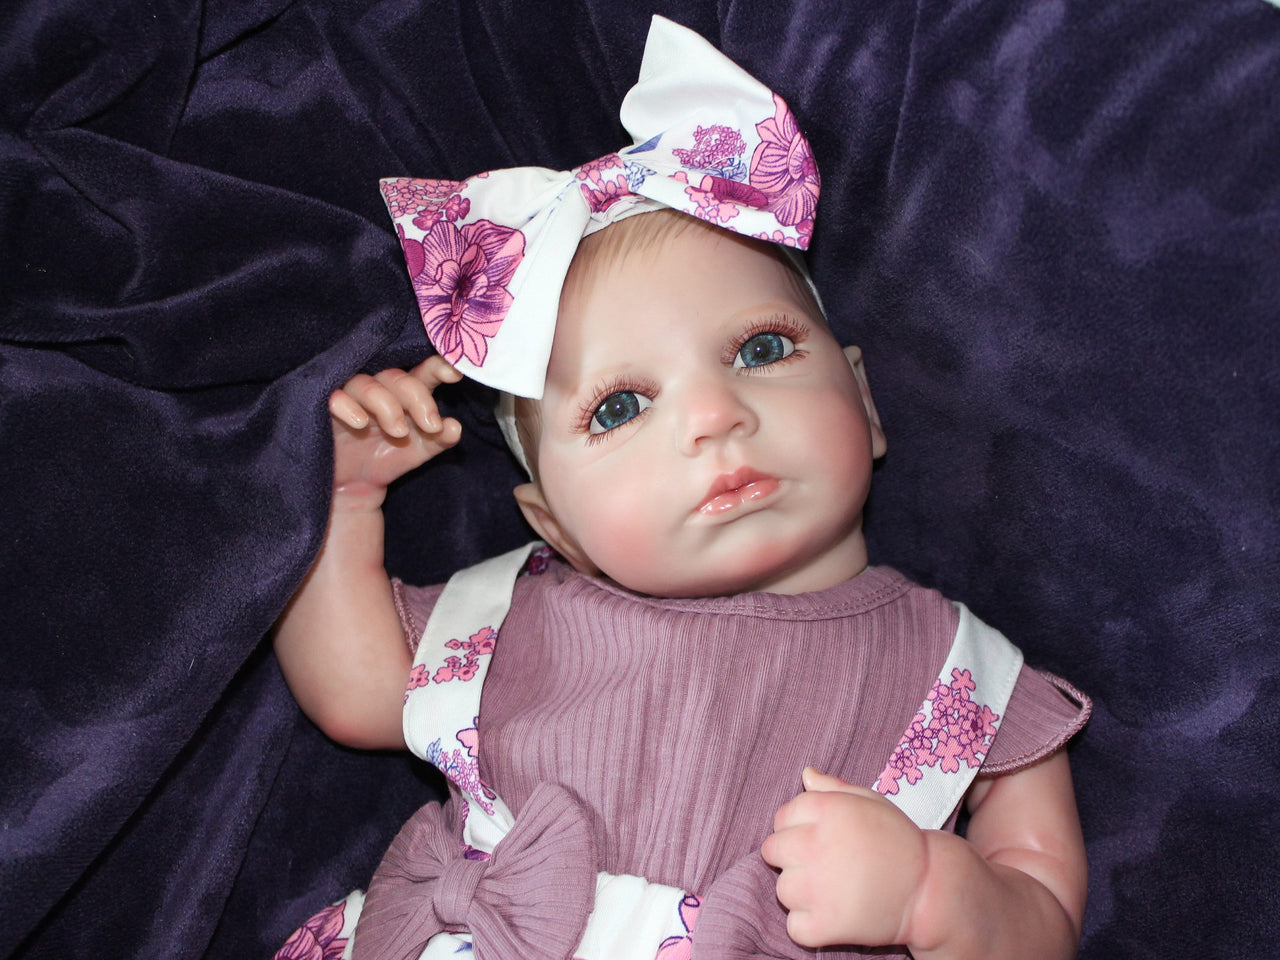 6 Pound Reborn Heavy Dolls Lifelike Baby Doll 20” 2 lbs. Weighted Newborn Baby Girl/Boy Soft For Children Child Friendly Gifts For Girls